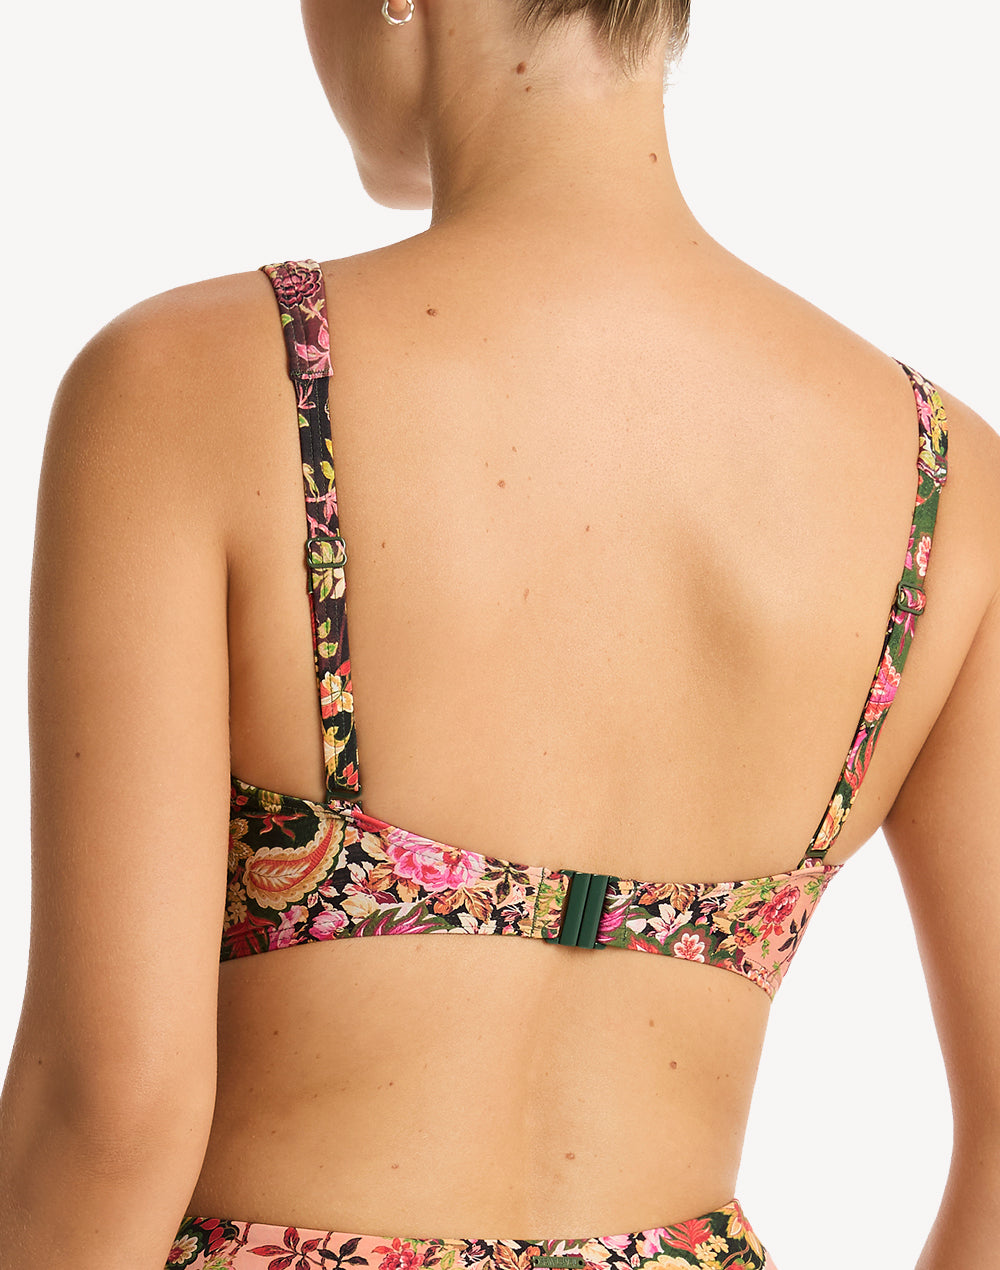 Wildflower G Cup Cross Front Bikini Top#color_wildflower-pink